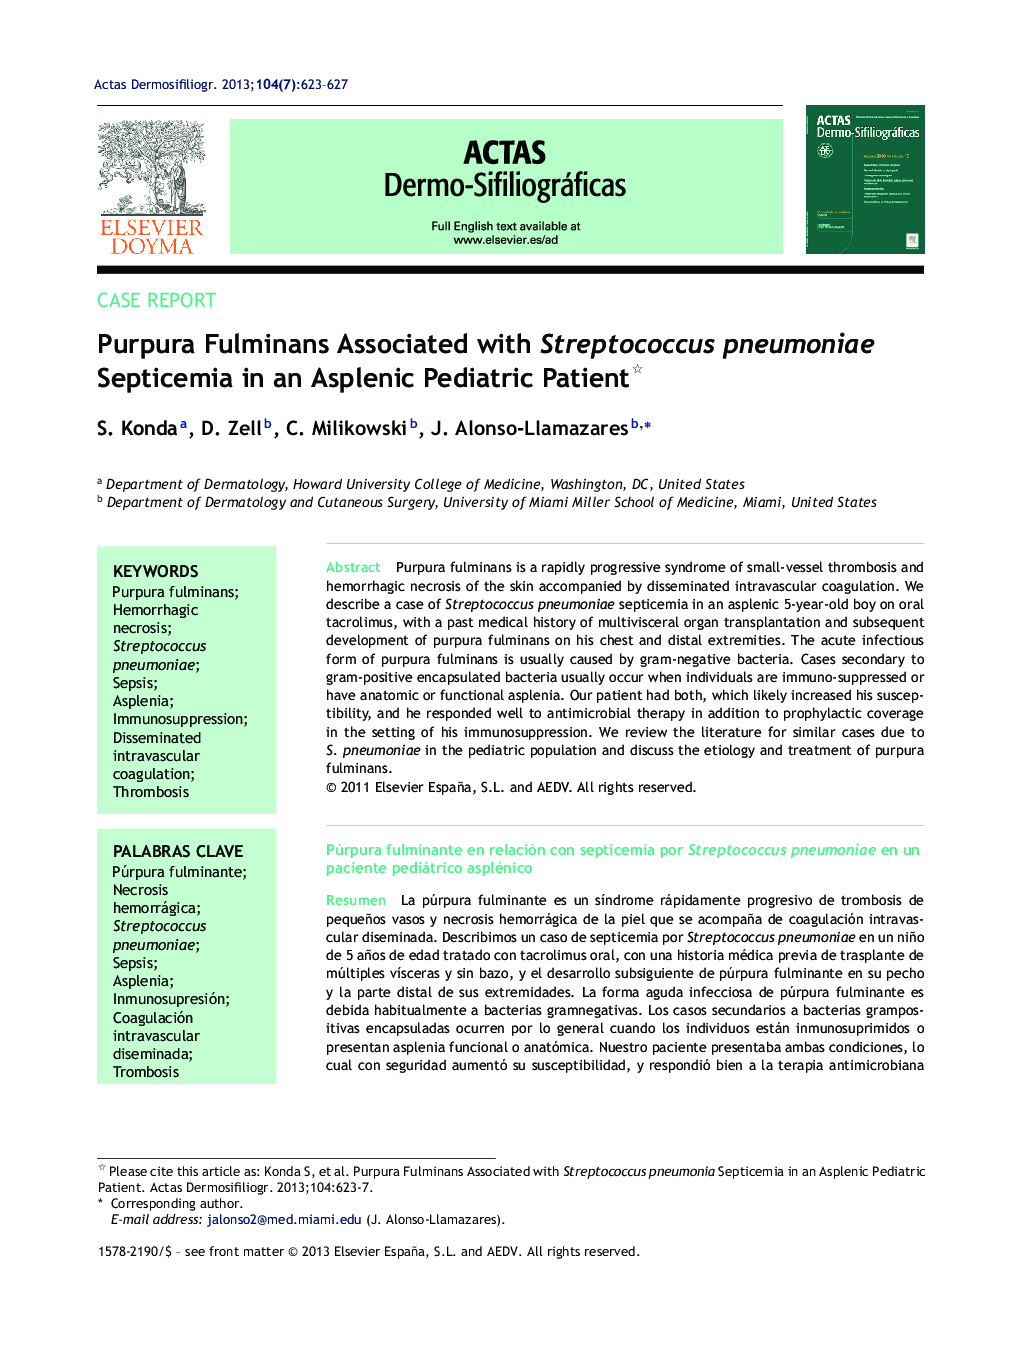 Purpura Fulminans Associated with Streptococcus pneumoniae Septicemia in an Asplenic Pediatric Patient 